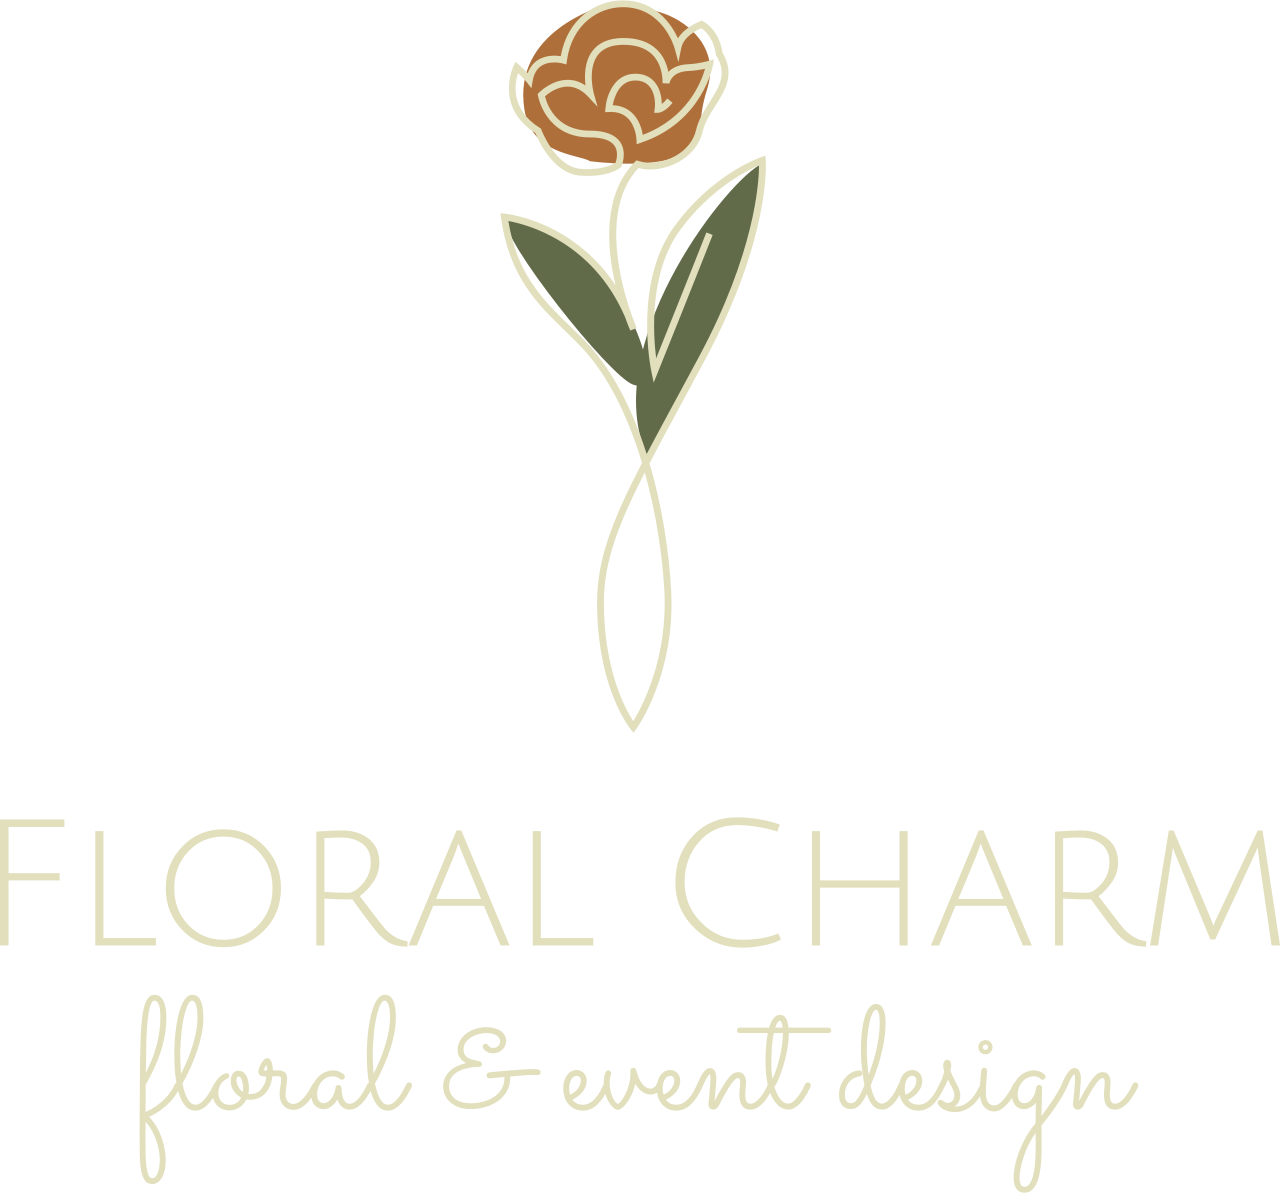 Floral Charm's logo